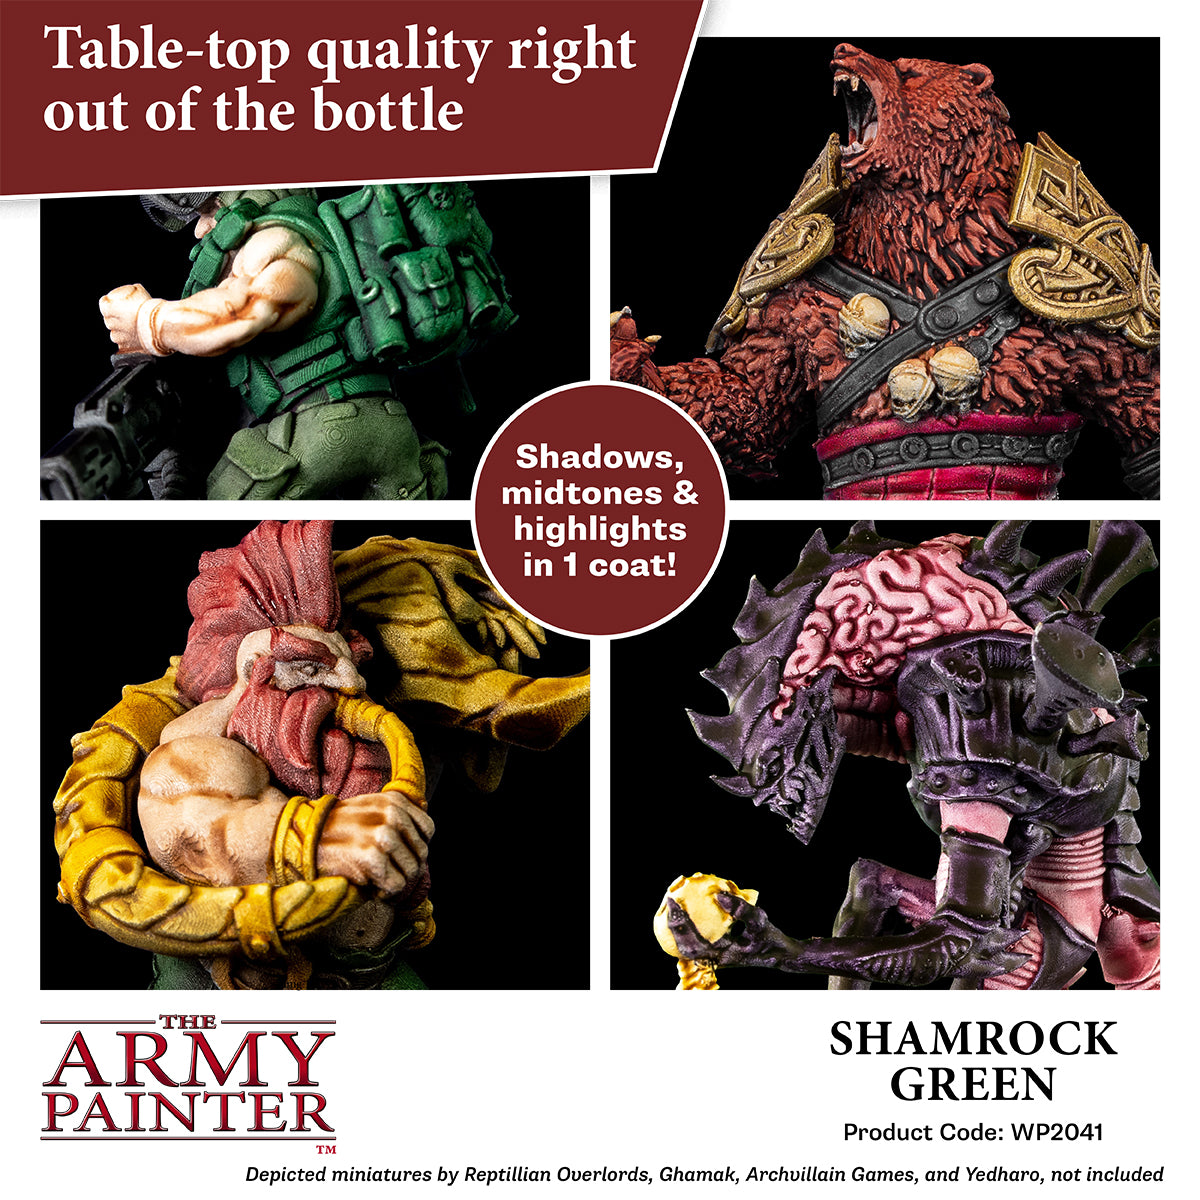 Army Painter: Speedpaint 2.0 - Shamrock Green